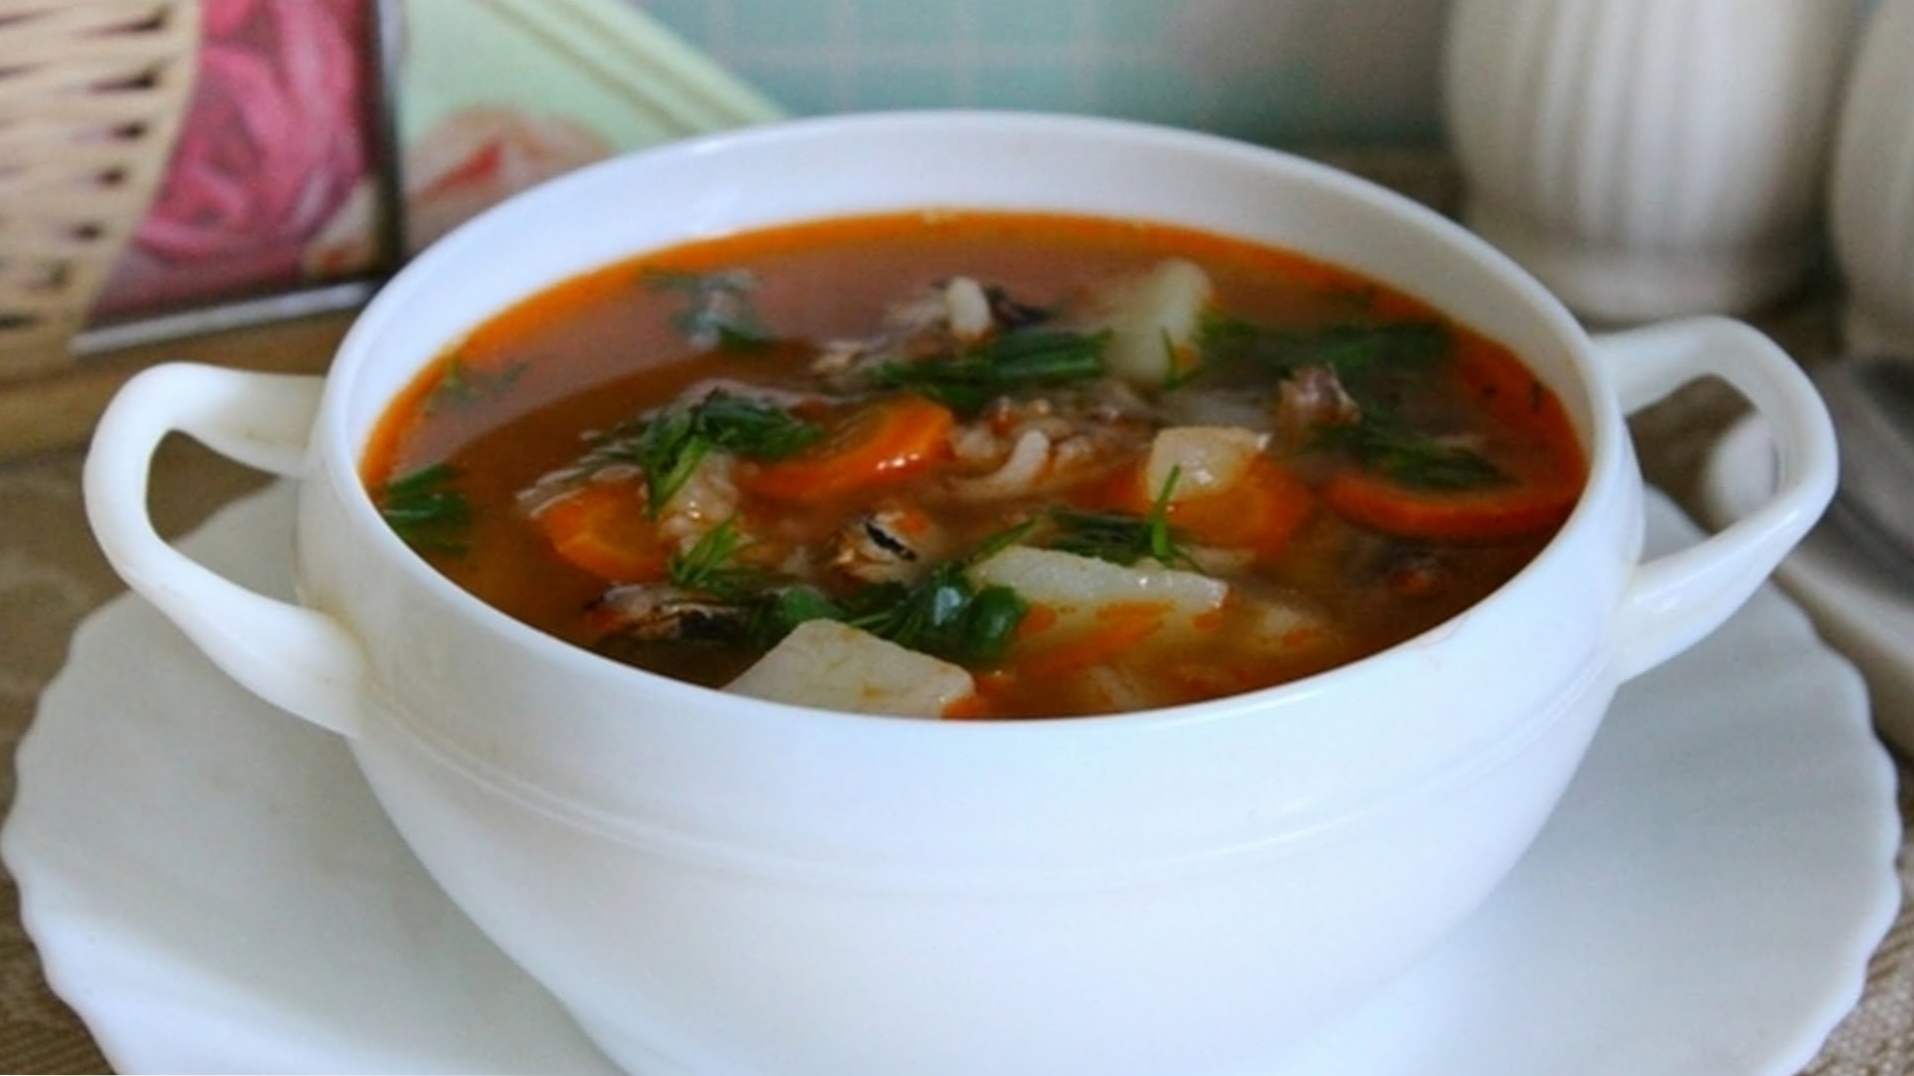 Spratova juha v paradižnikovi omaki - 6 receptov, kako kuhati okusno juho